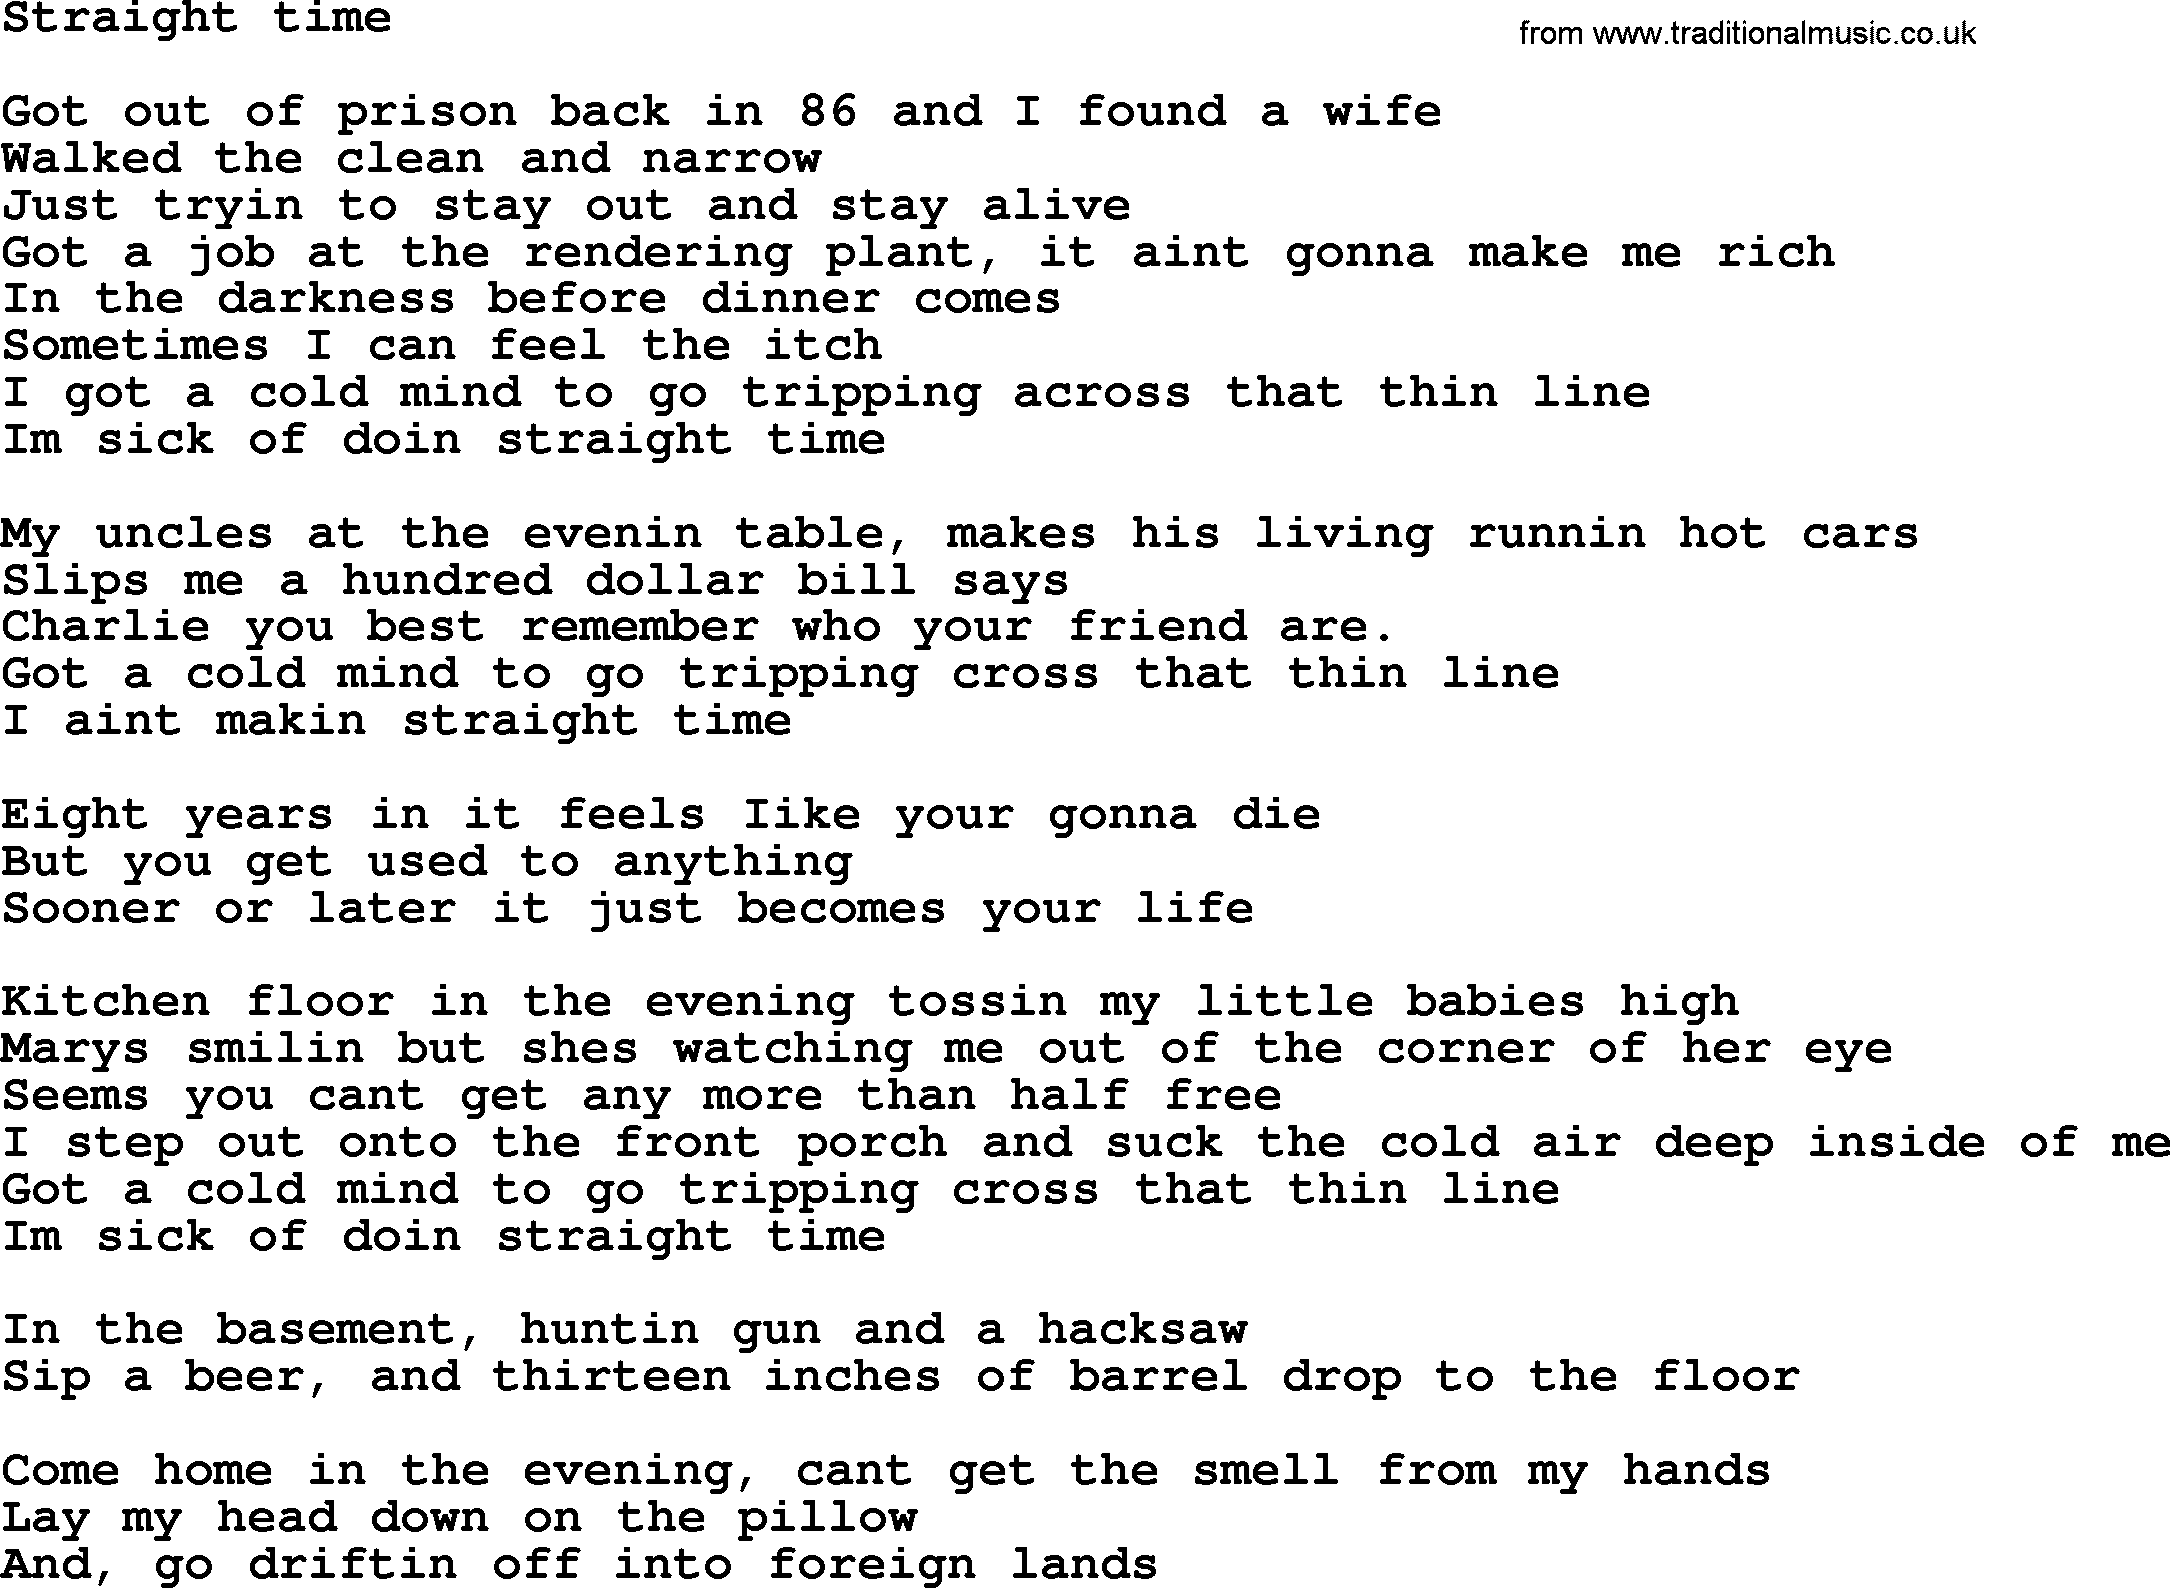 Bruce Springsteen song: Straight Time lyrics